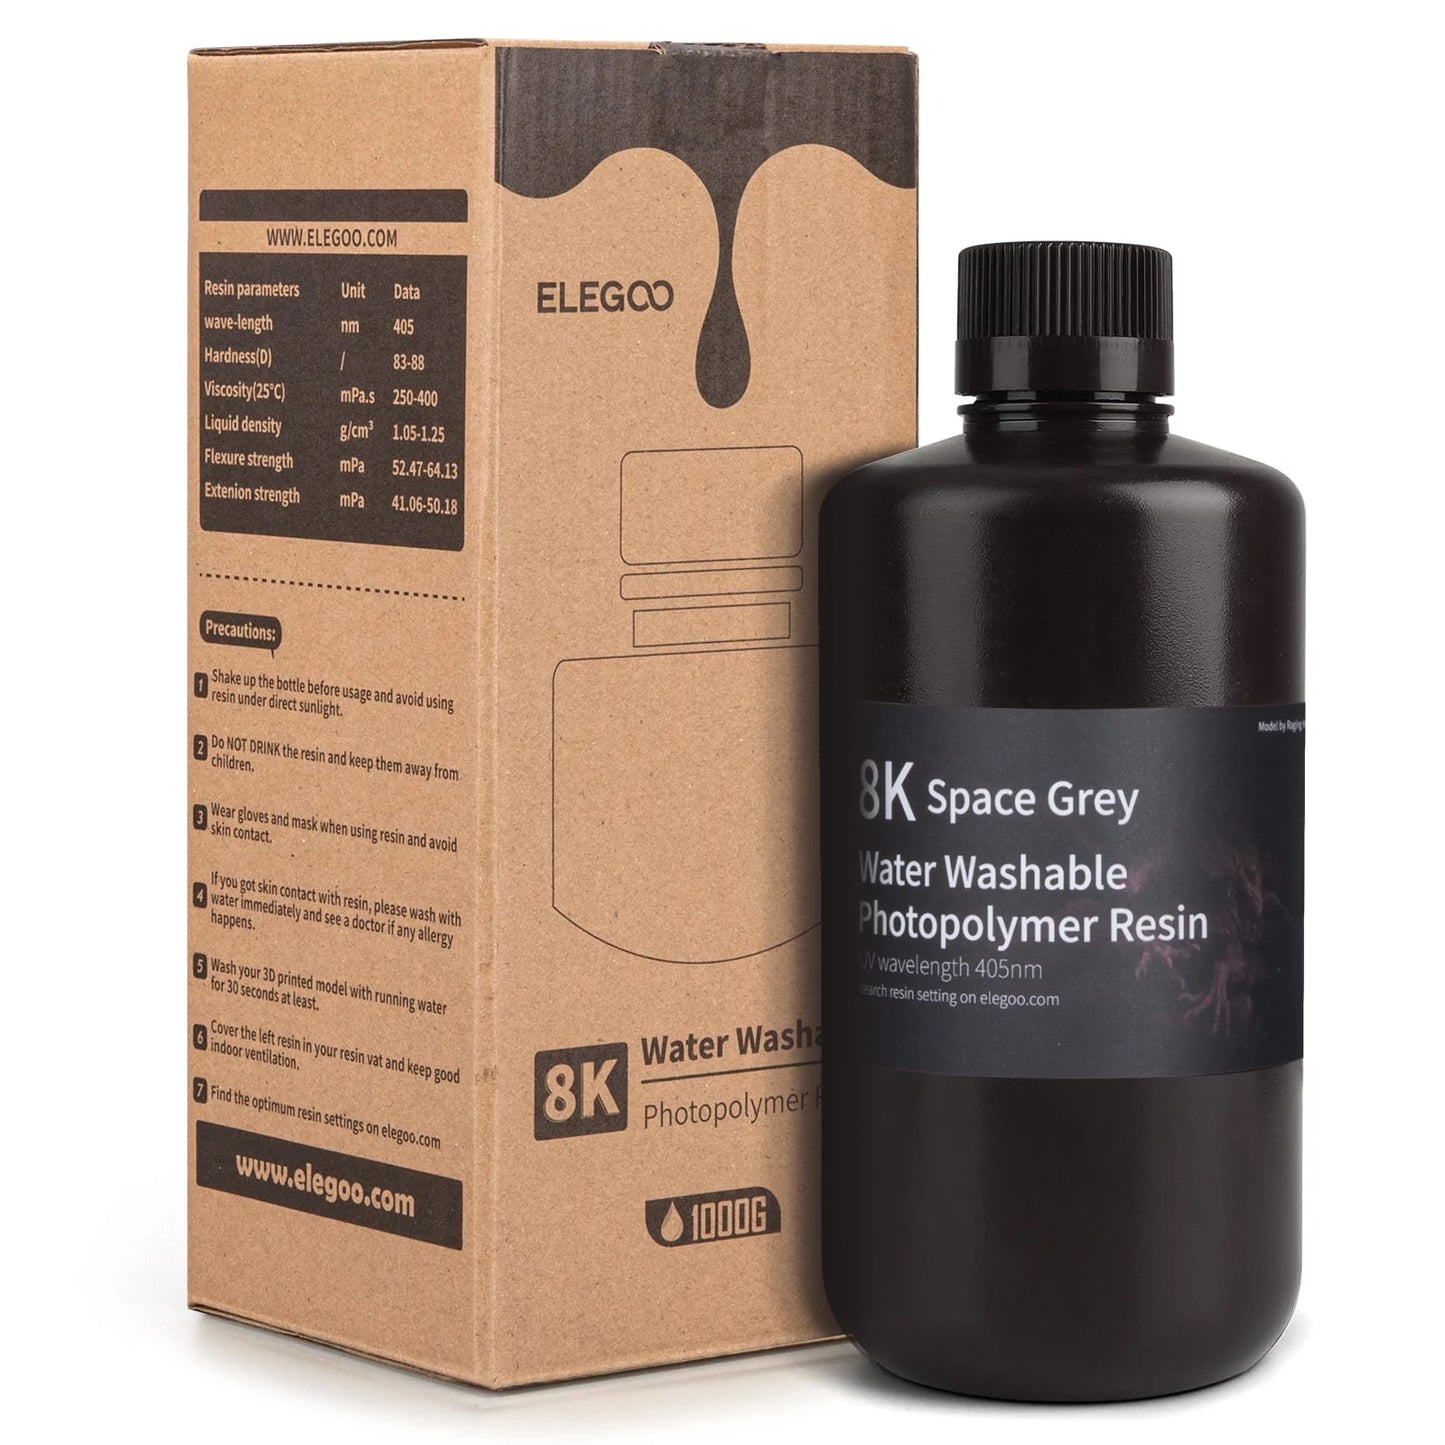 ELEGOO 8K Water-washable Photopolymer Resin Space Gray 1KG